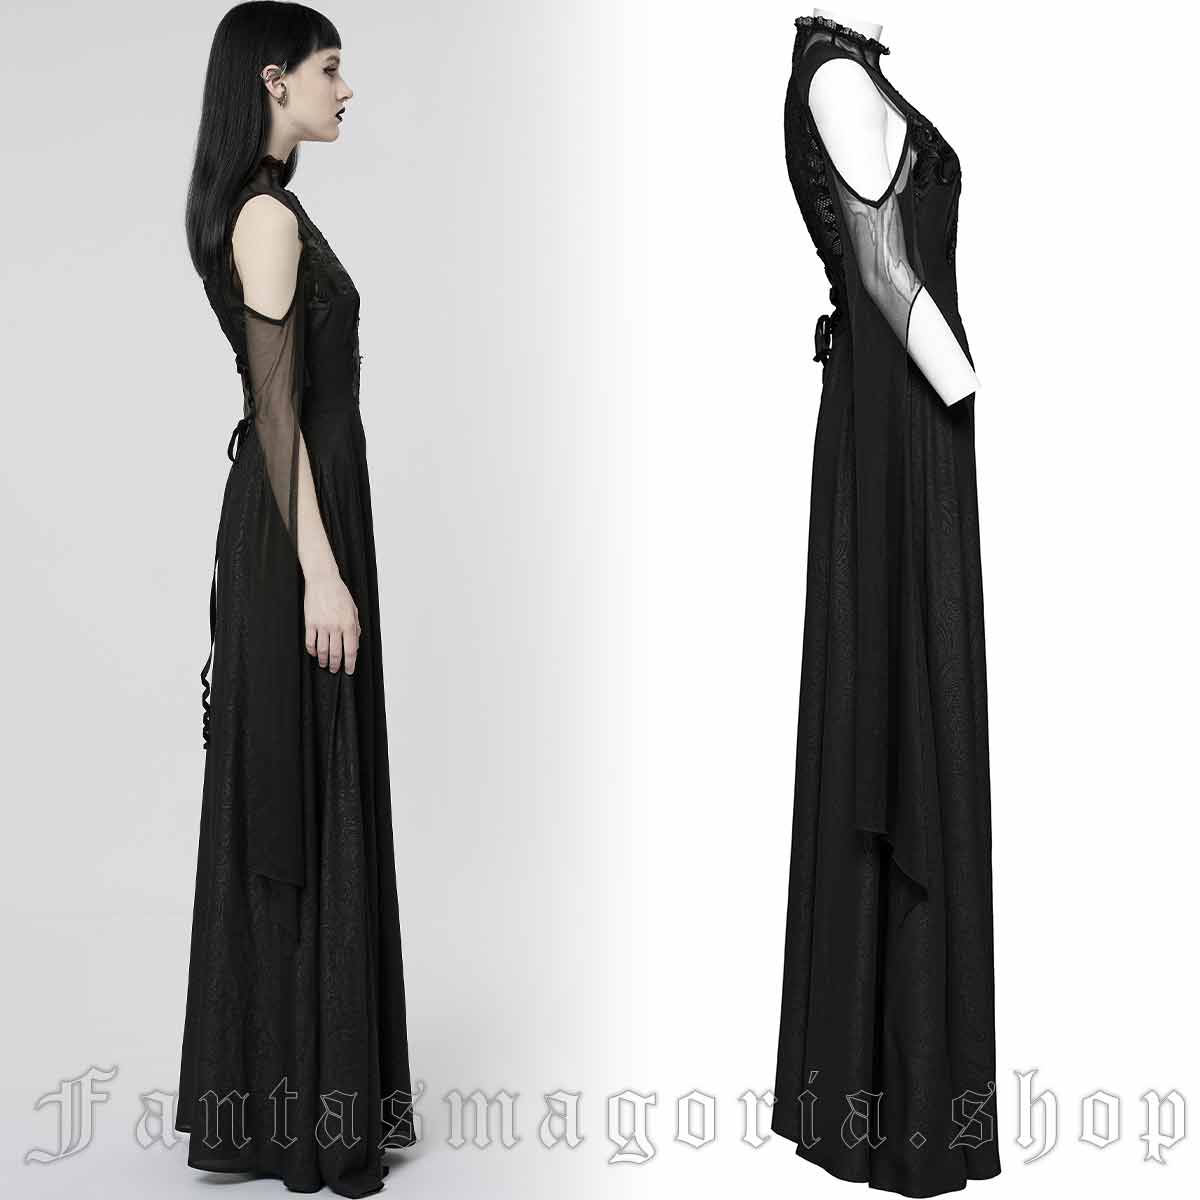 Black Sheer Dress, Tulle Dress, See Through Dress, Plus Size Clothing,  Elegant Dress, Mesh Dress, Gothic Clothing, Evening Cyberpunk Dress 